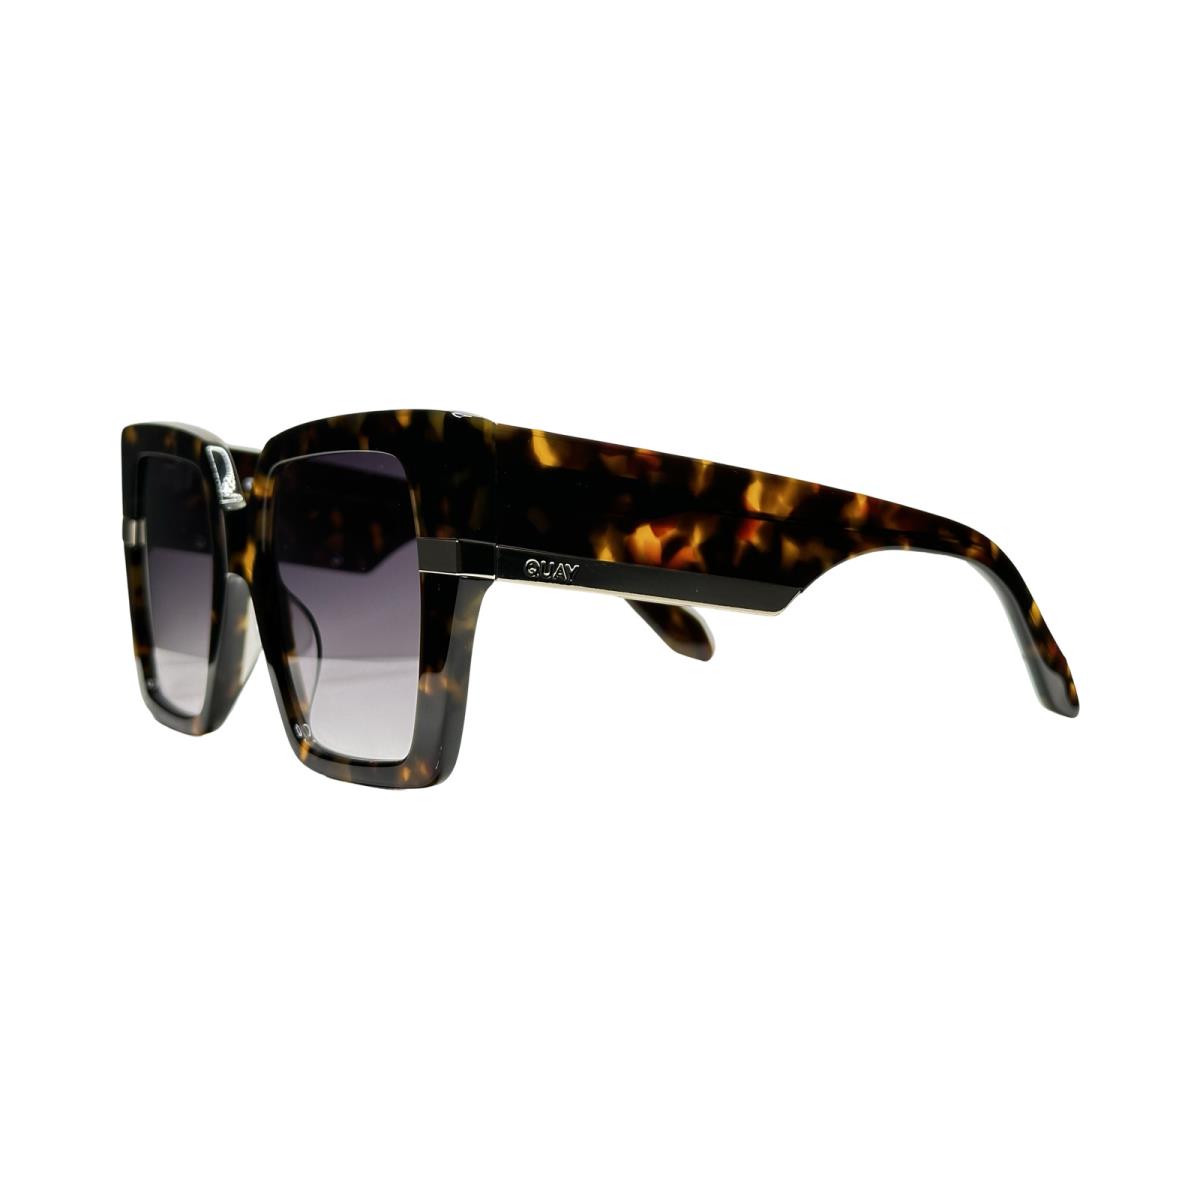 Quay Notorious Designer Chic Sunglasses Oversized Square Frames Multiple Options